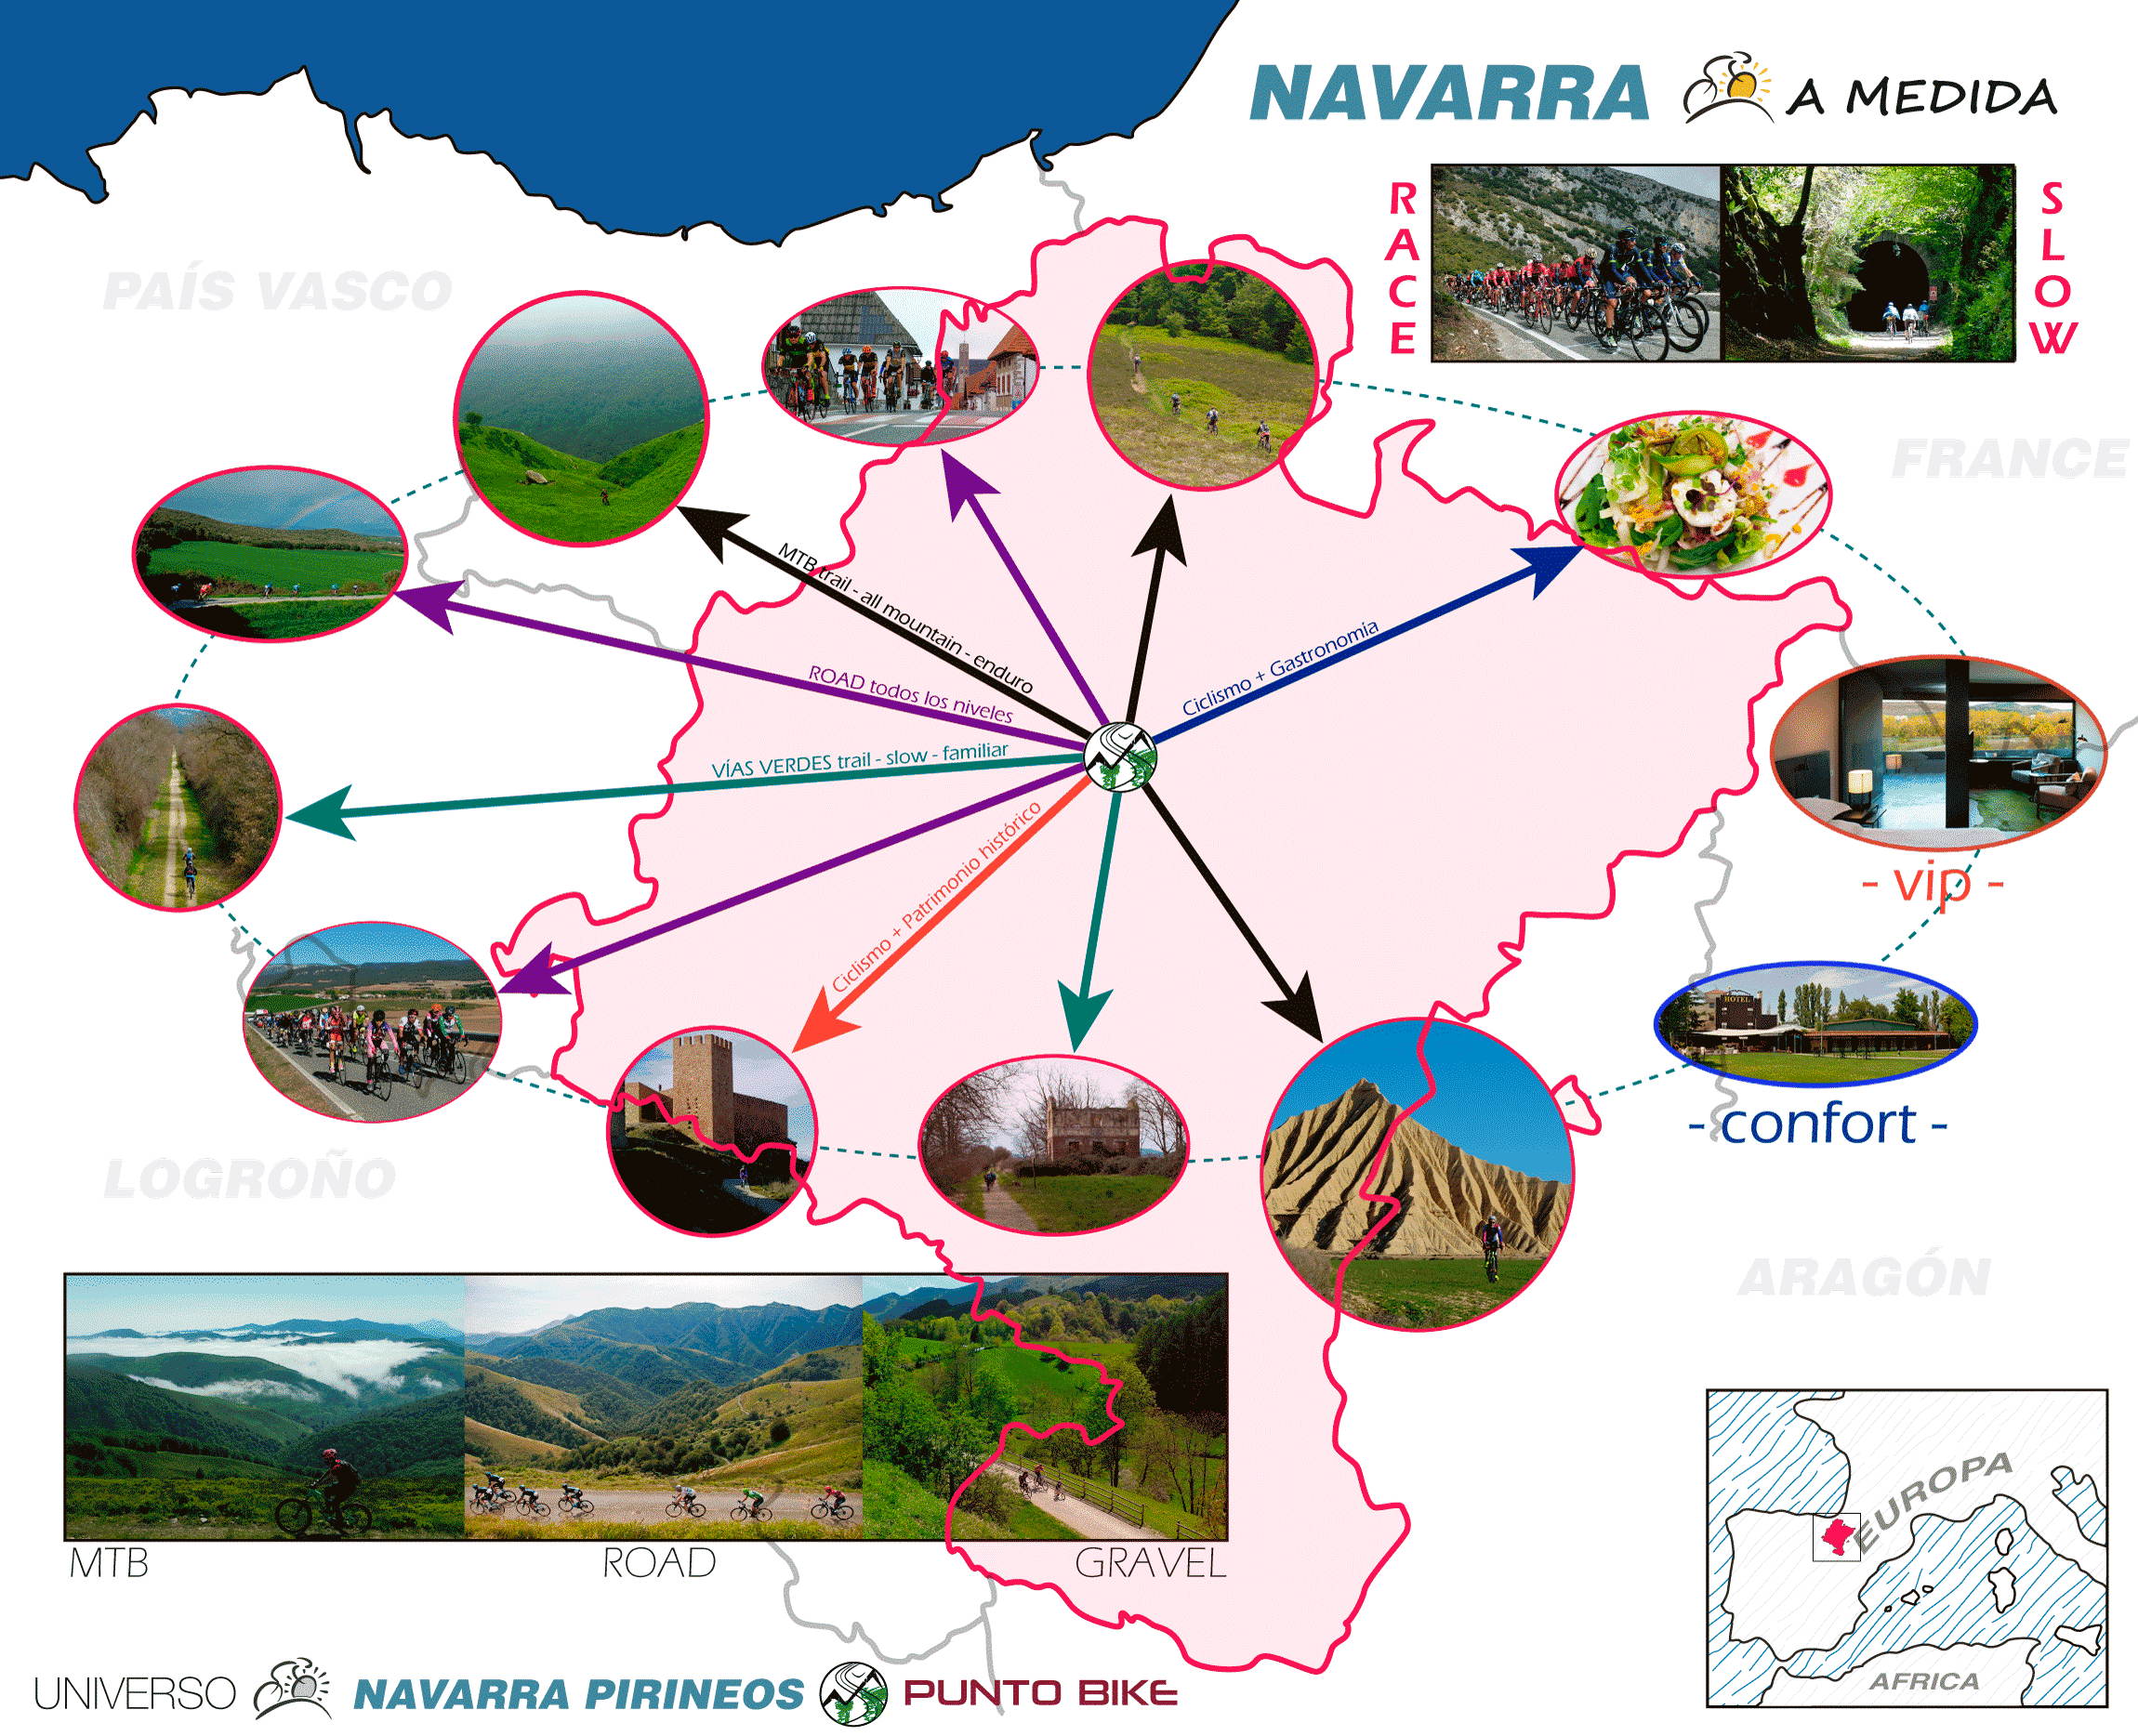 Map Navarra A Medida